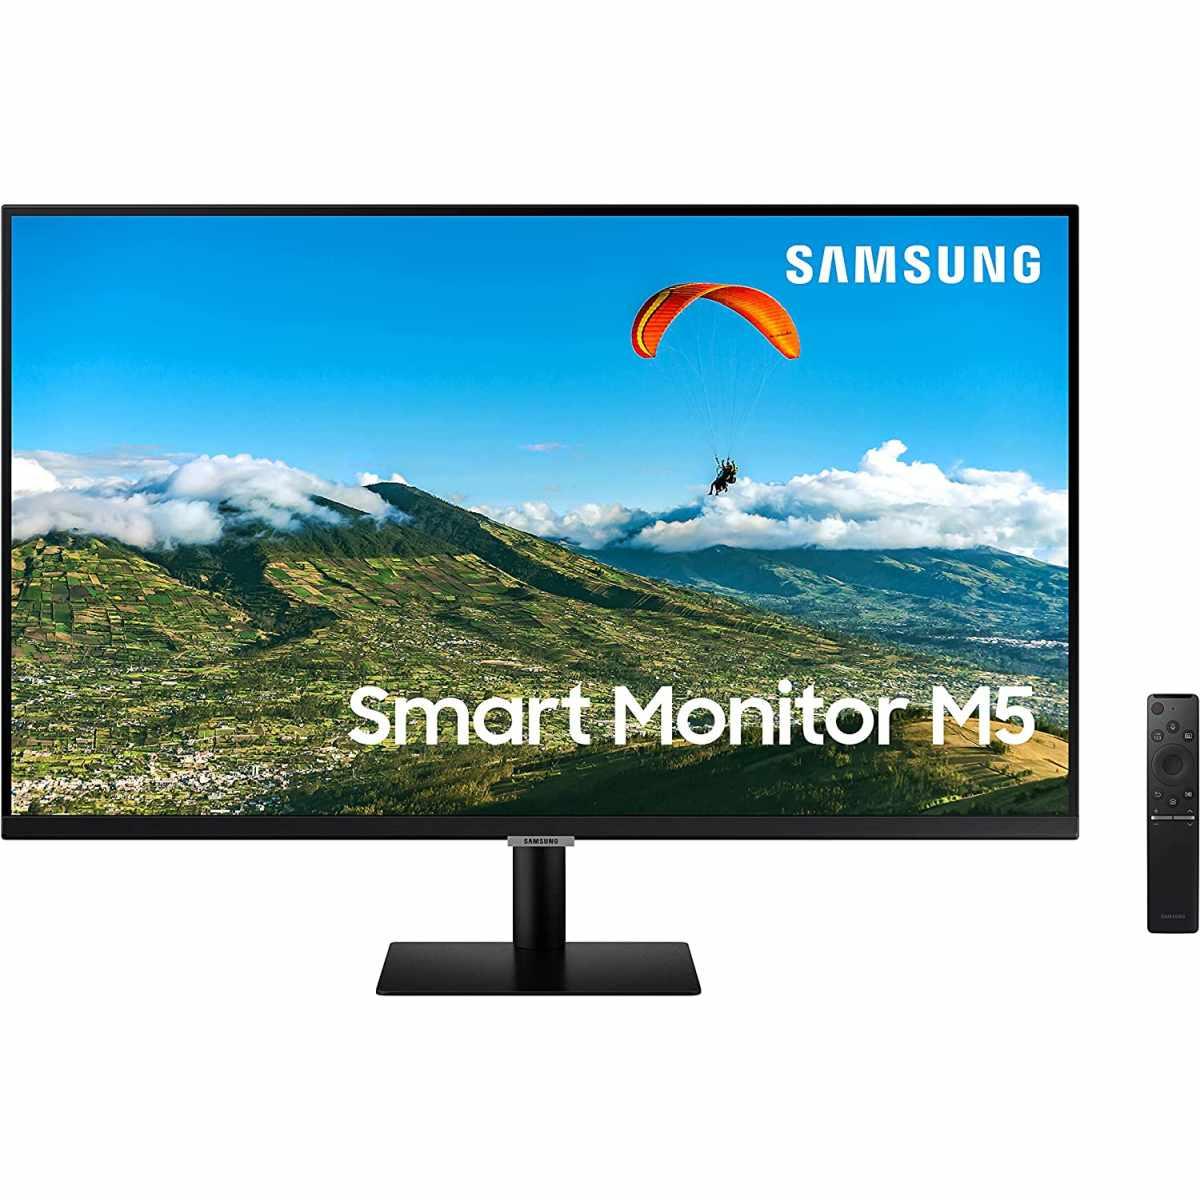 Samsung Smart Monitor M5 LED 27" FullHD 1080p WiFi, Bluetooth - Risposta 8ms - Telecomando - Altoparlanti Integrati - 16:9 - USB, HDMI - VESA 100x100mm